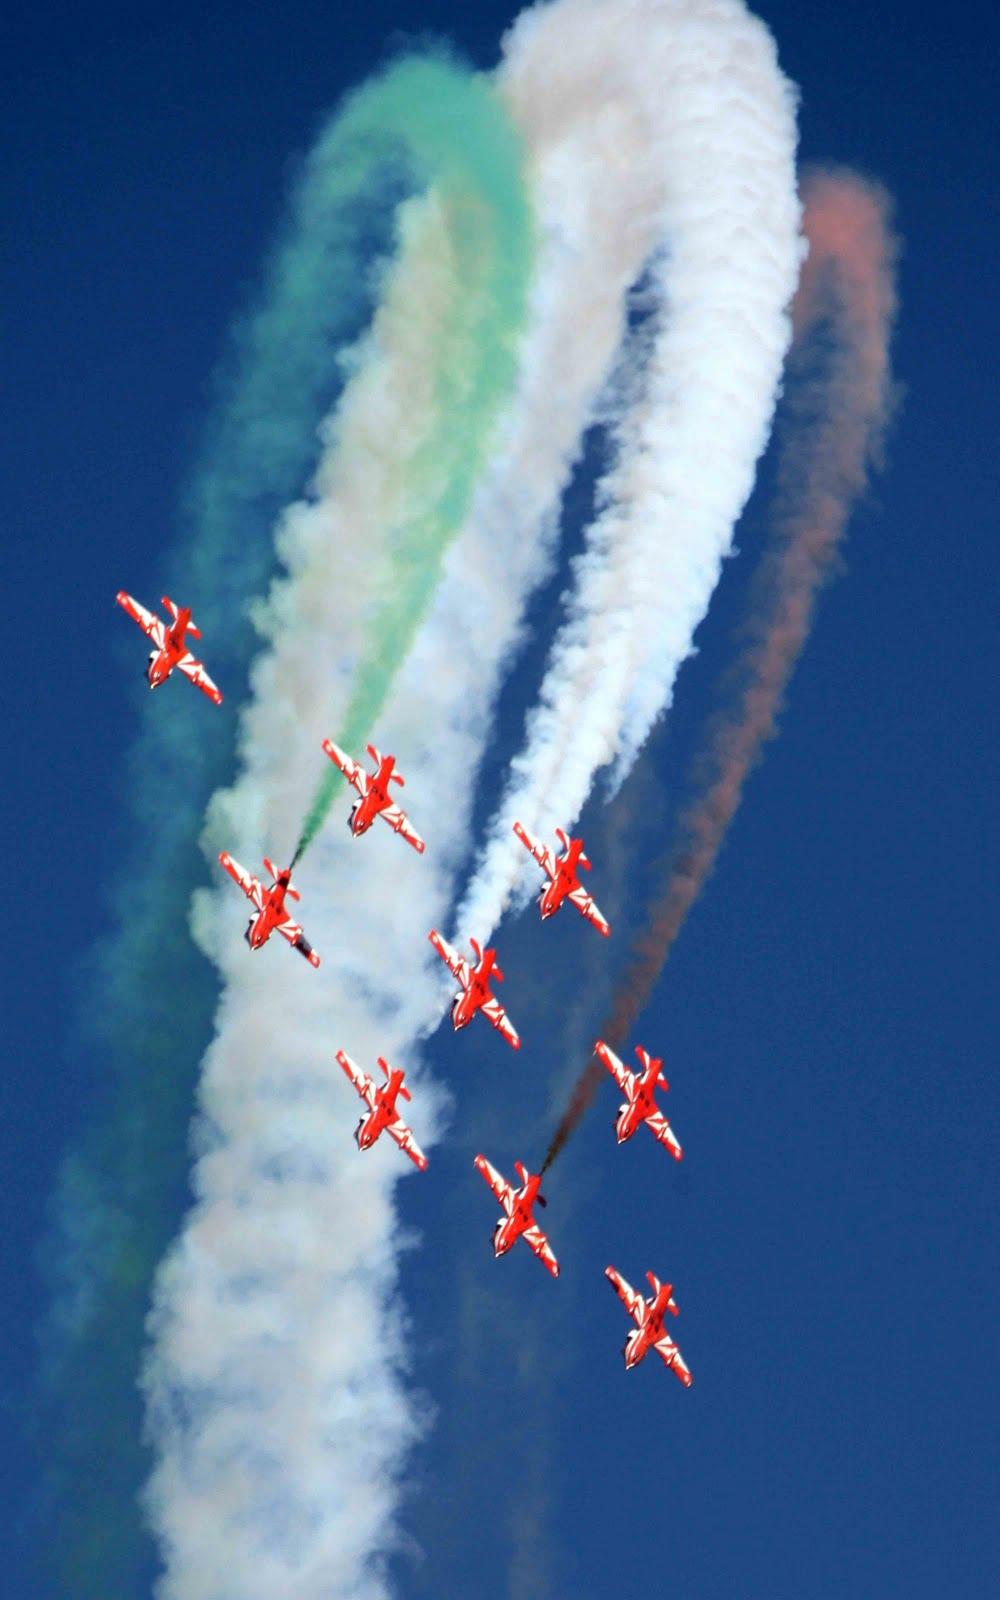 Broadsword: 21 more Hawks for IAF's Surya Kiran aerobatics display team